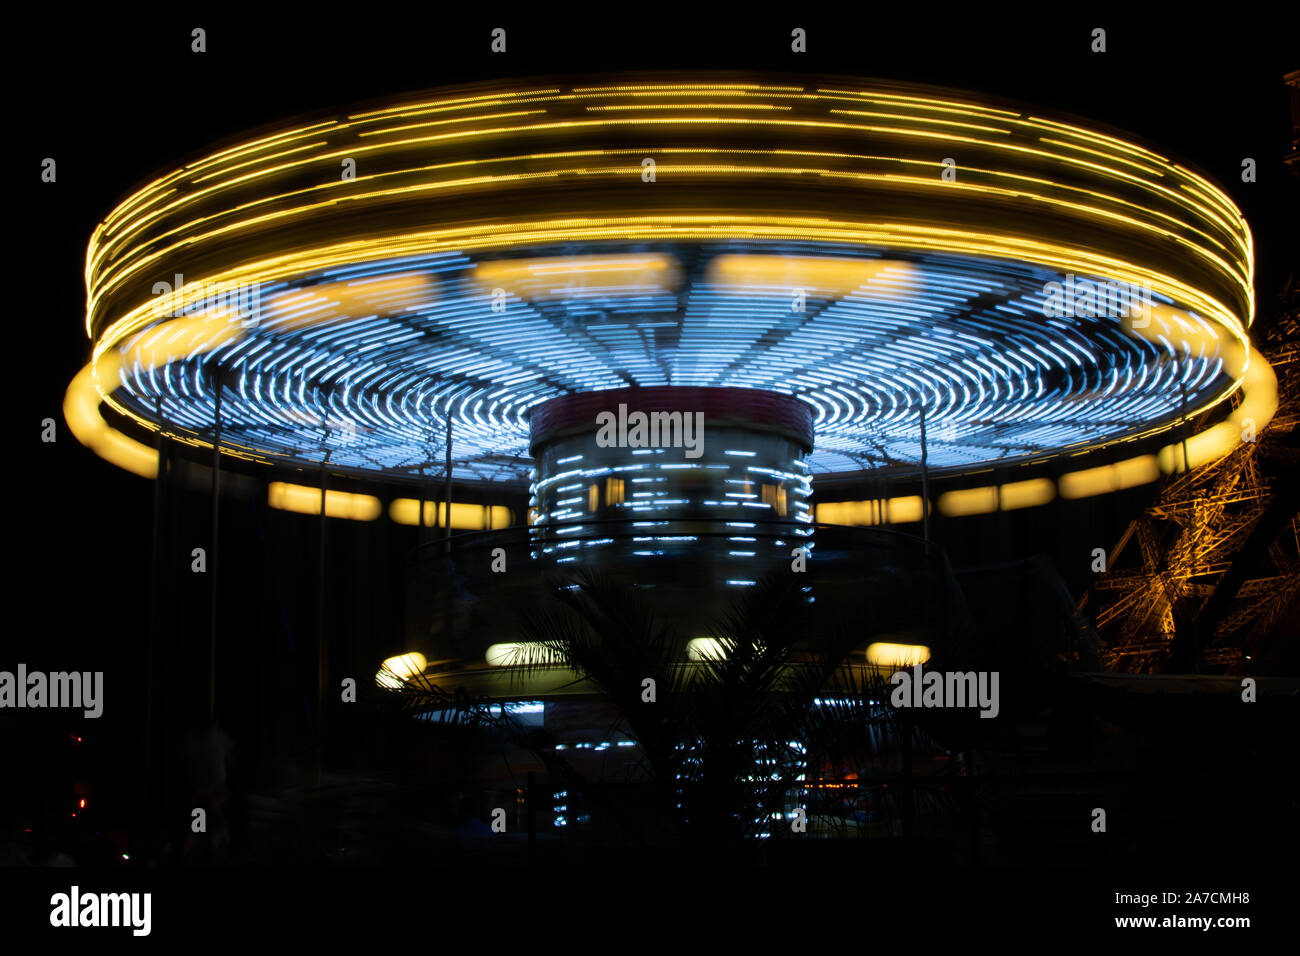 Giostra (merry-go-round) time lapse photo shot in tarda serata una luce a carnevale. Foto Stock